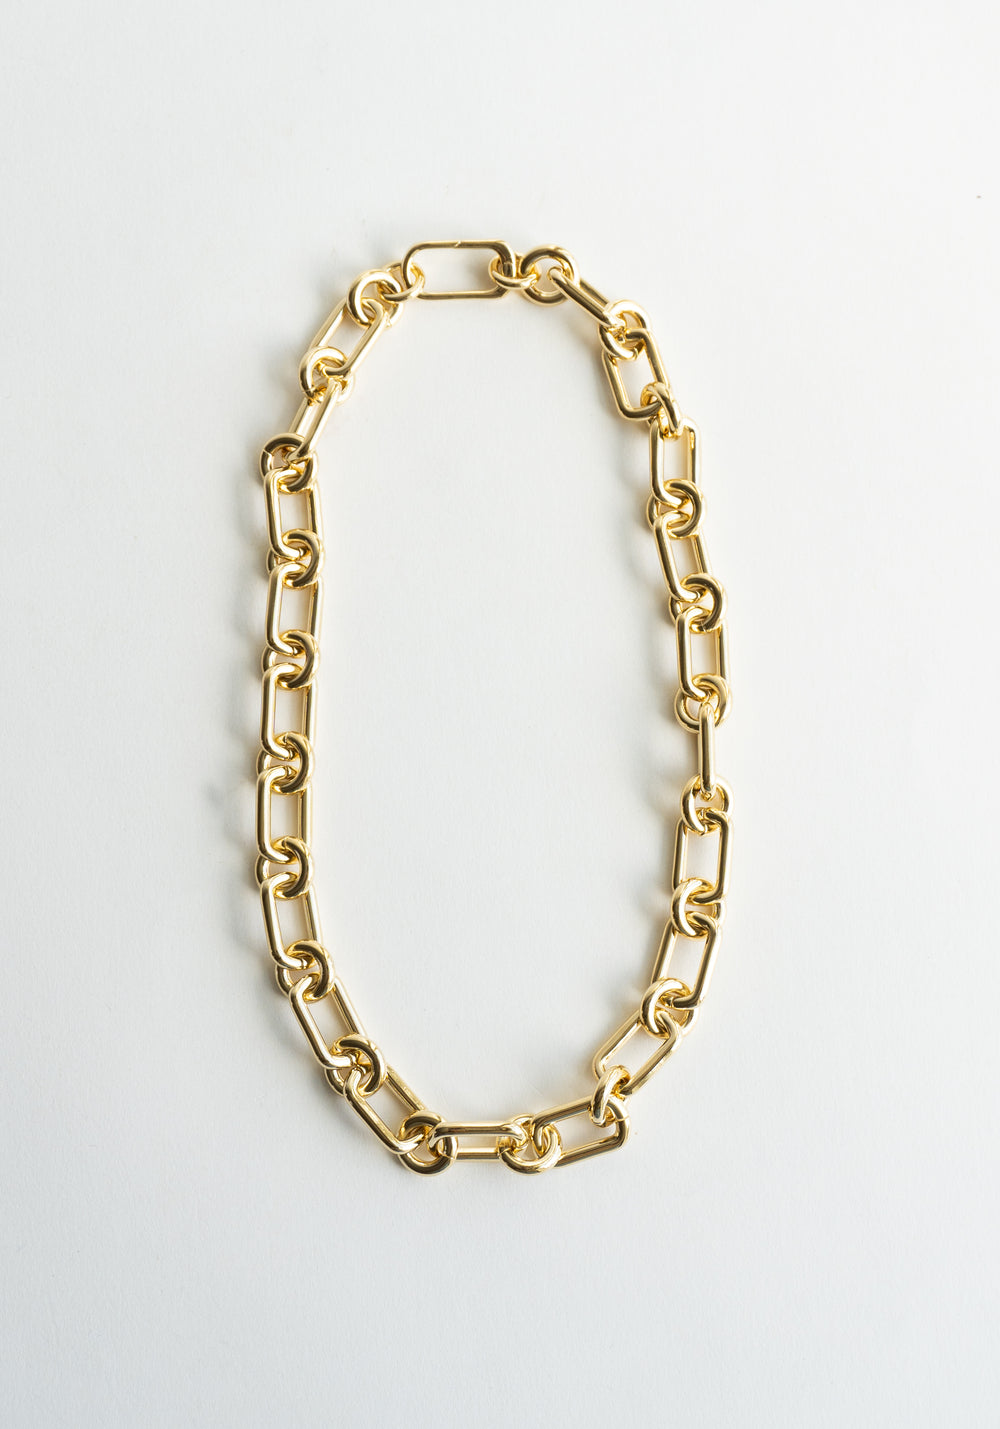 Laura Lombardi Cresca Necklace in Brass